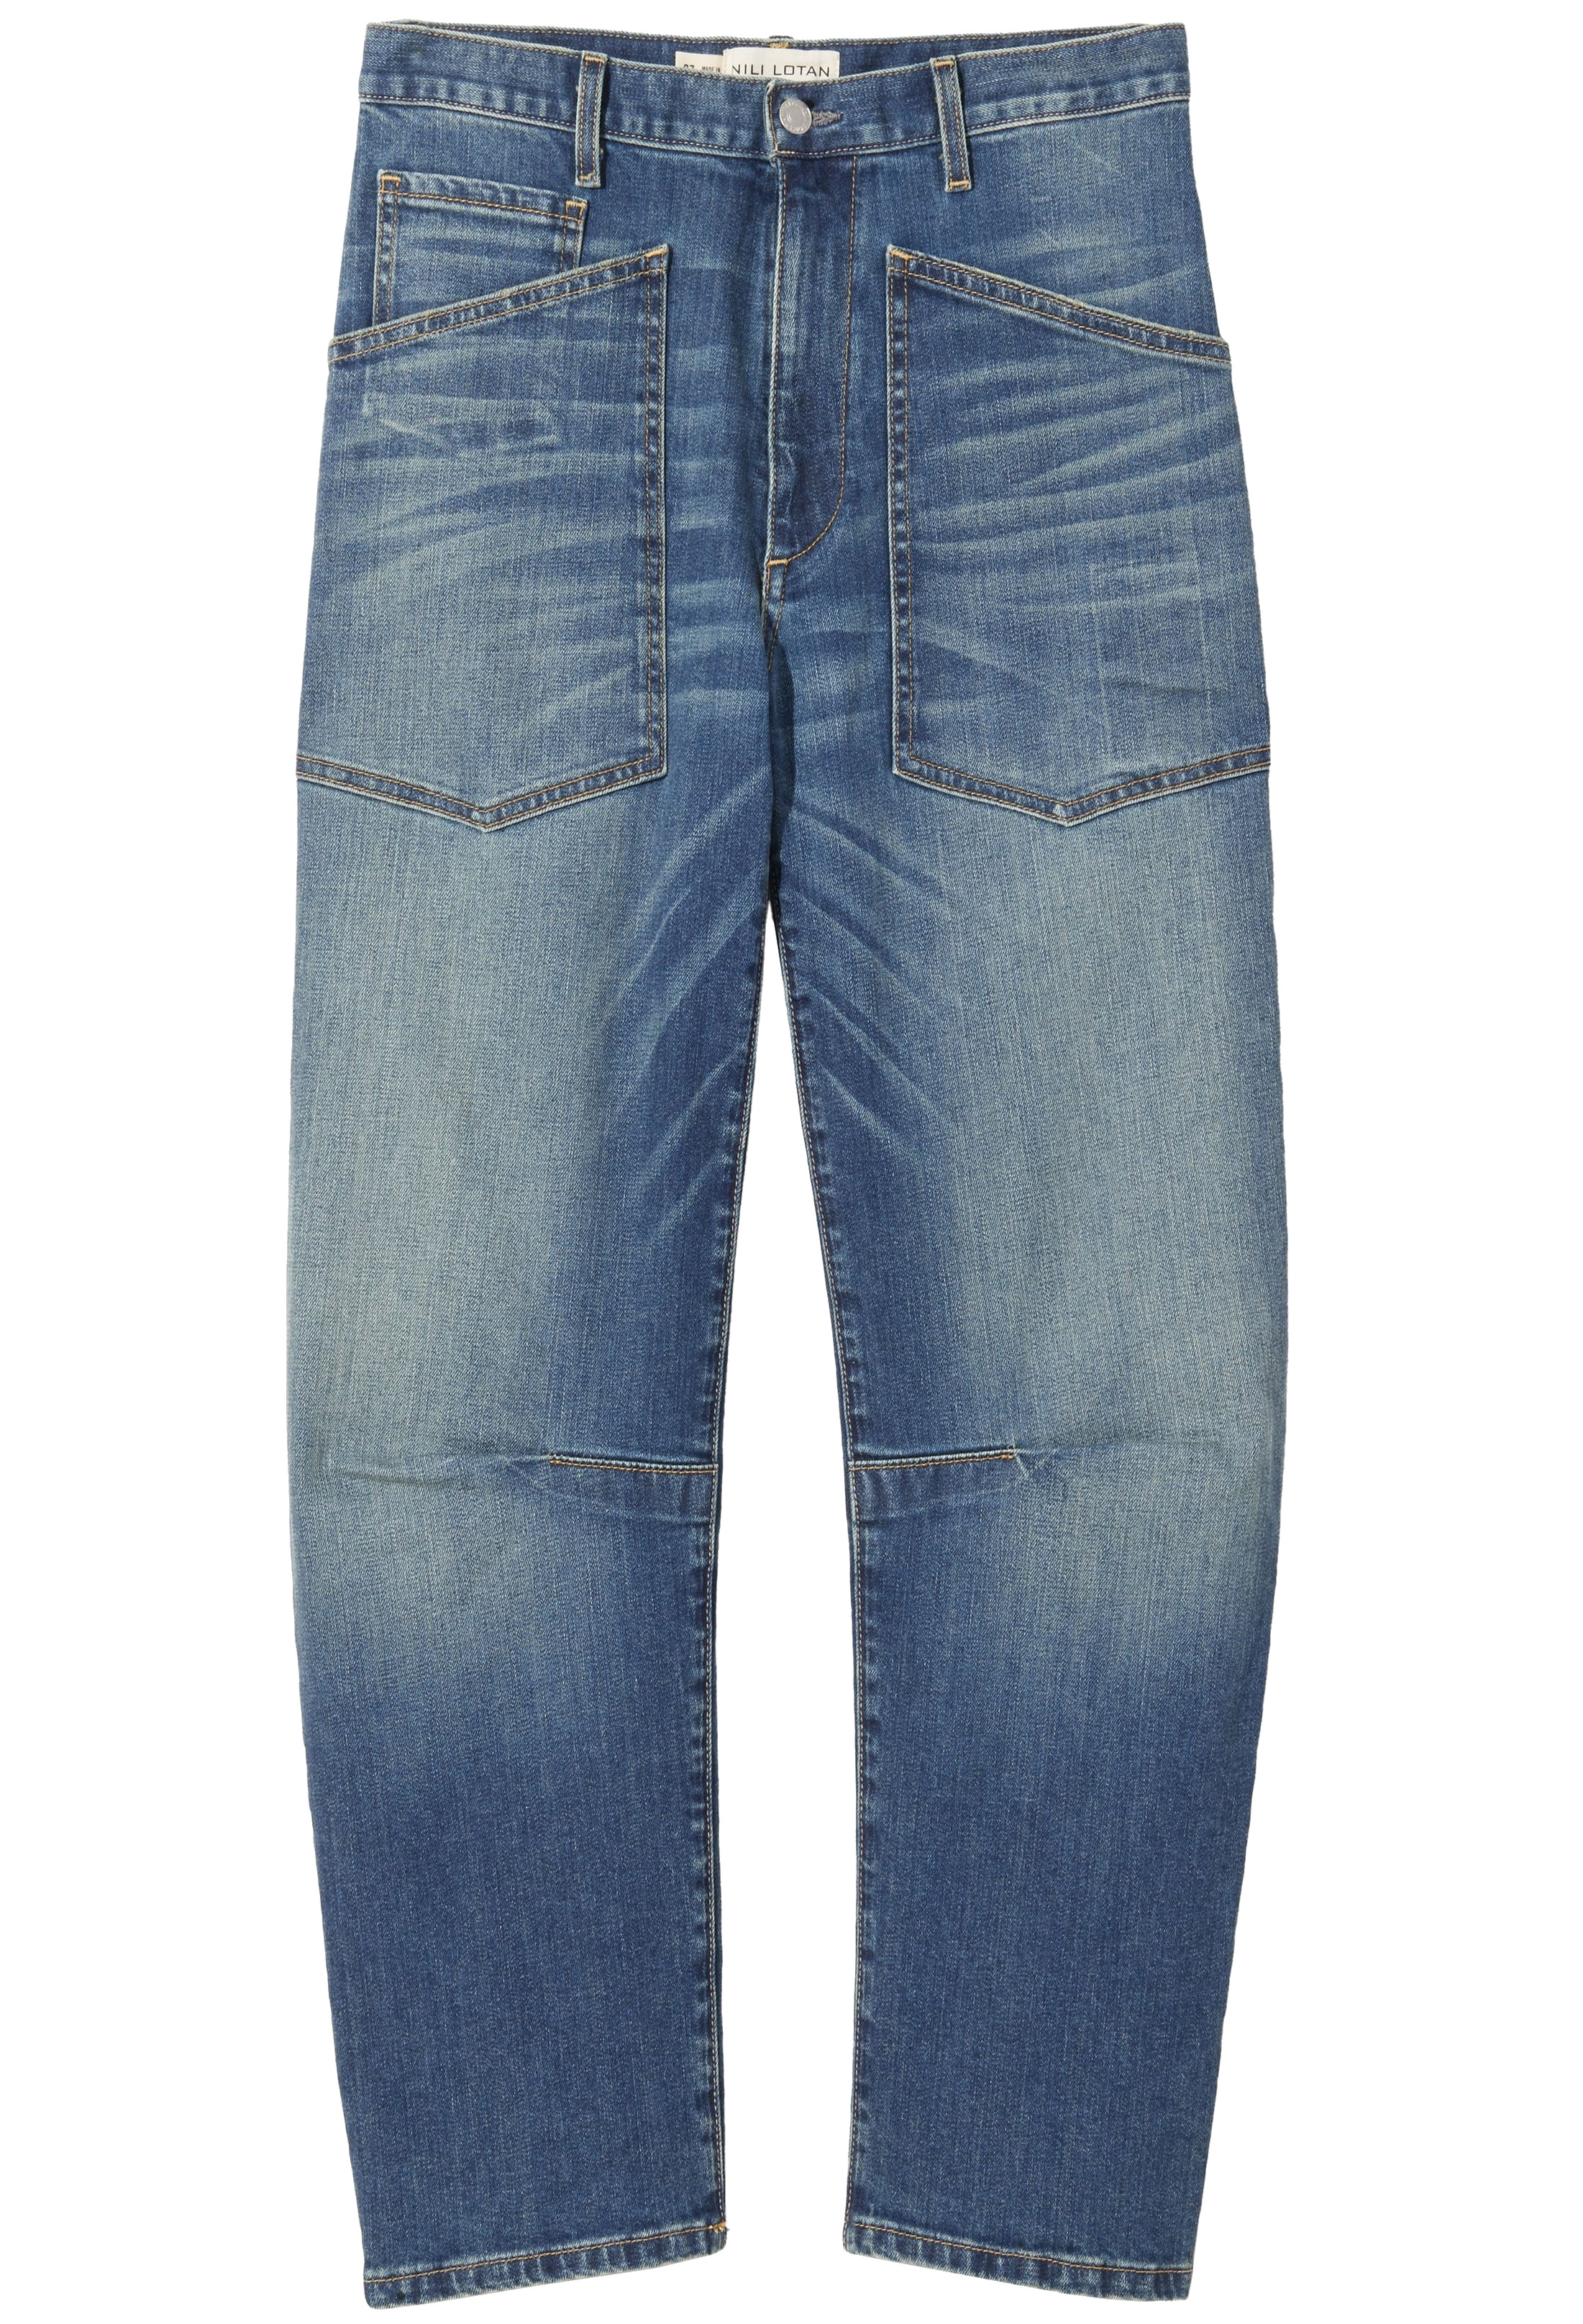 NILI LOTAN Shon Jeans in Classic Wash 26